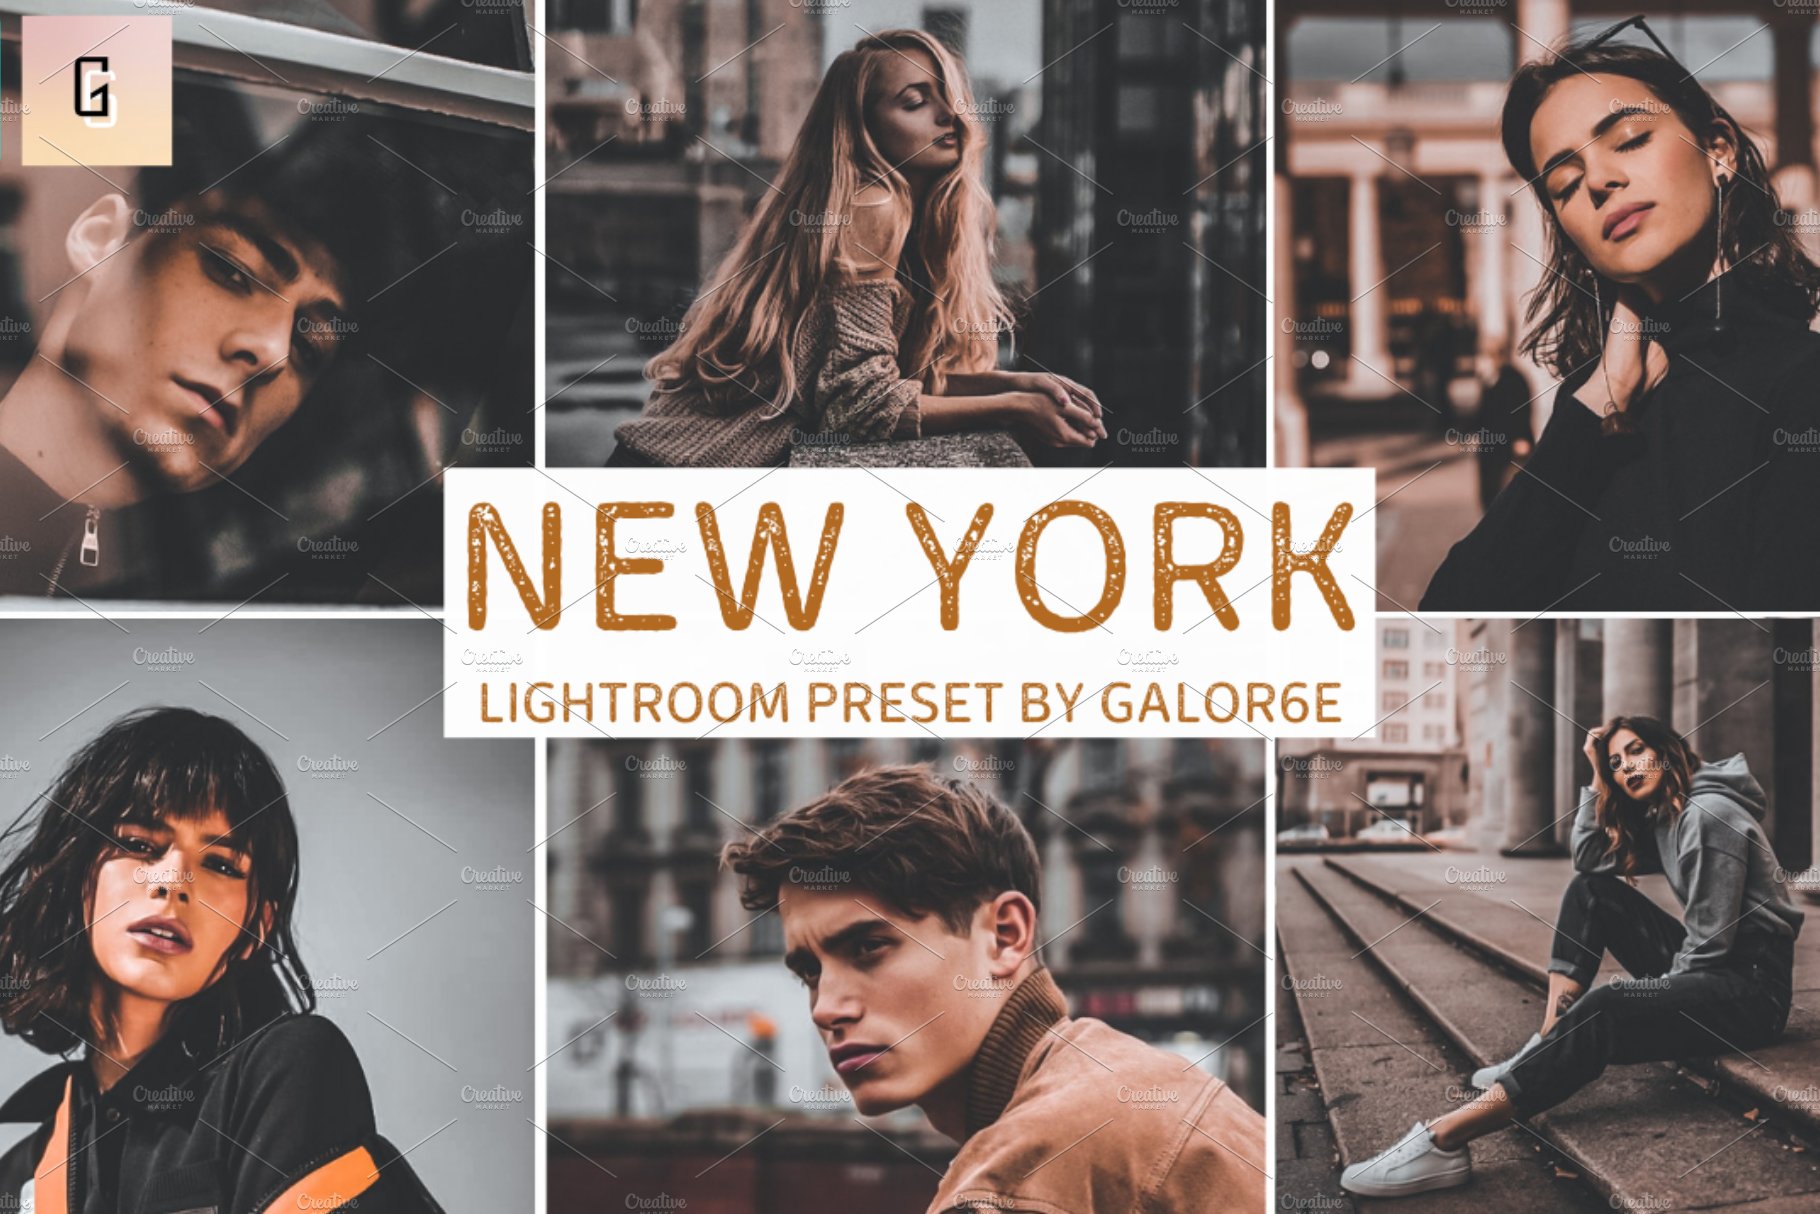 Lightroom Preset NEW YORK - GALOR6Ecover image.